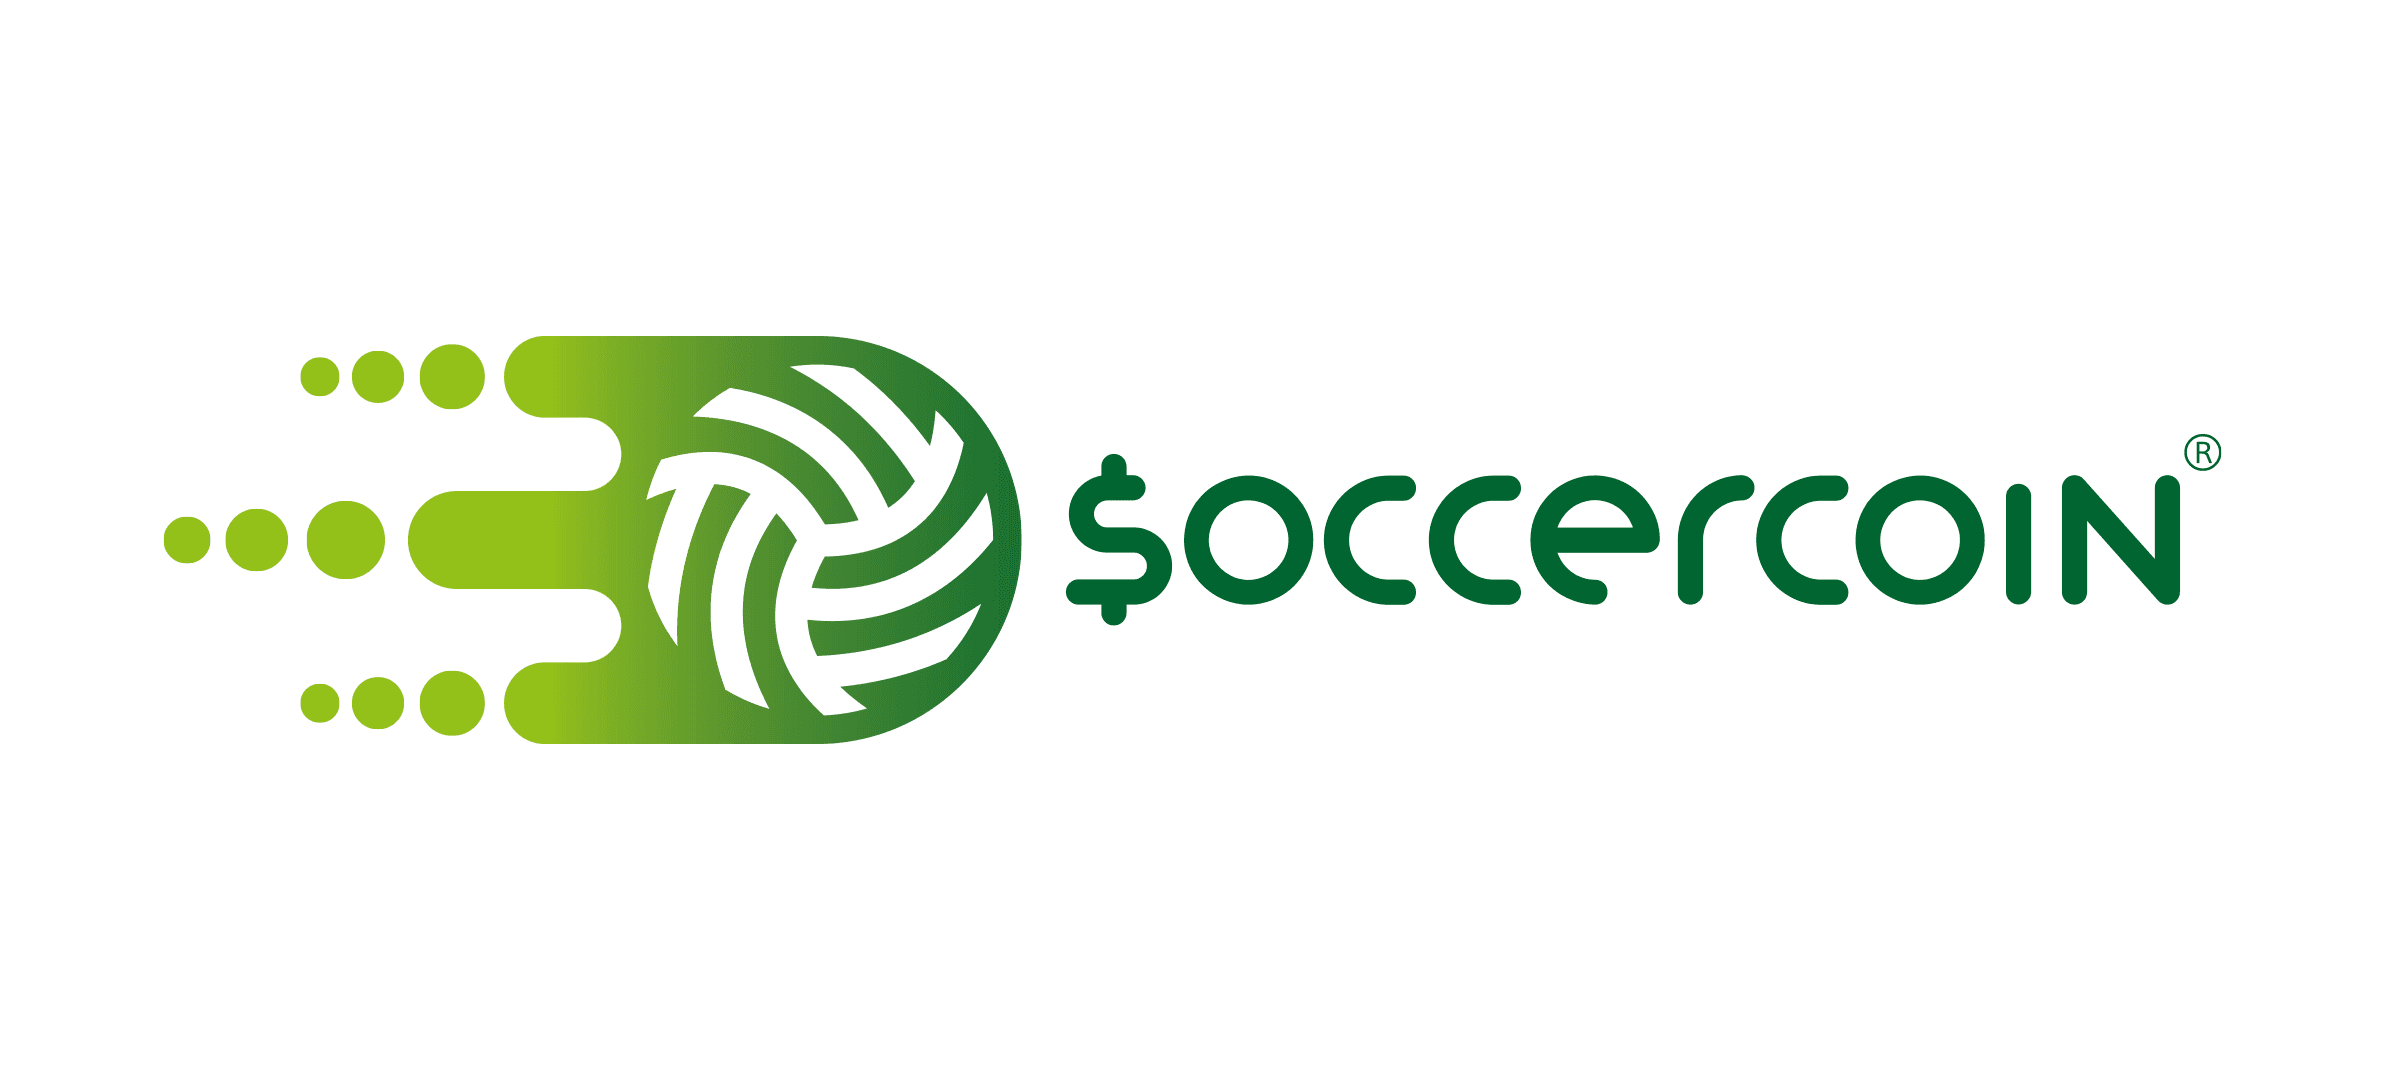 SoccerCoin_NFT バナー